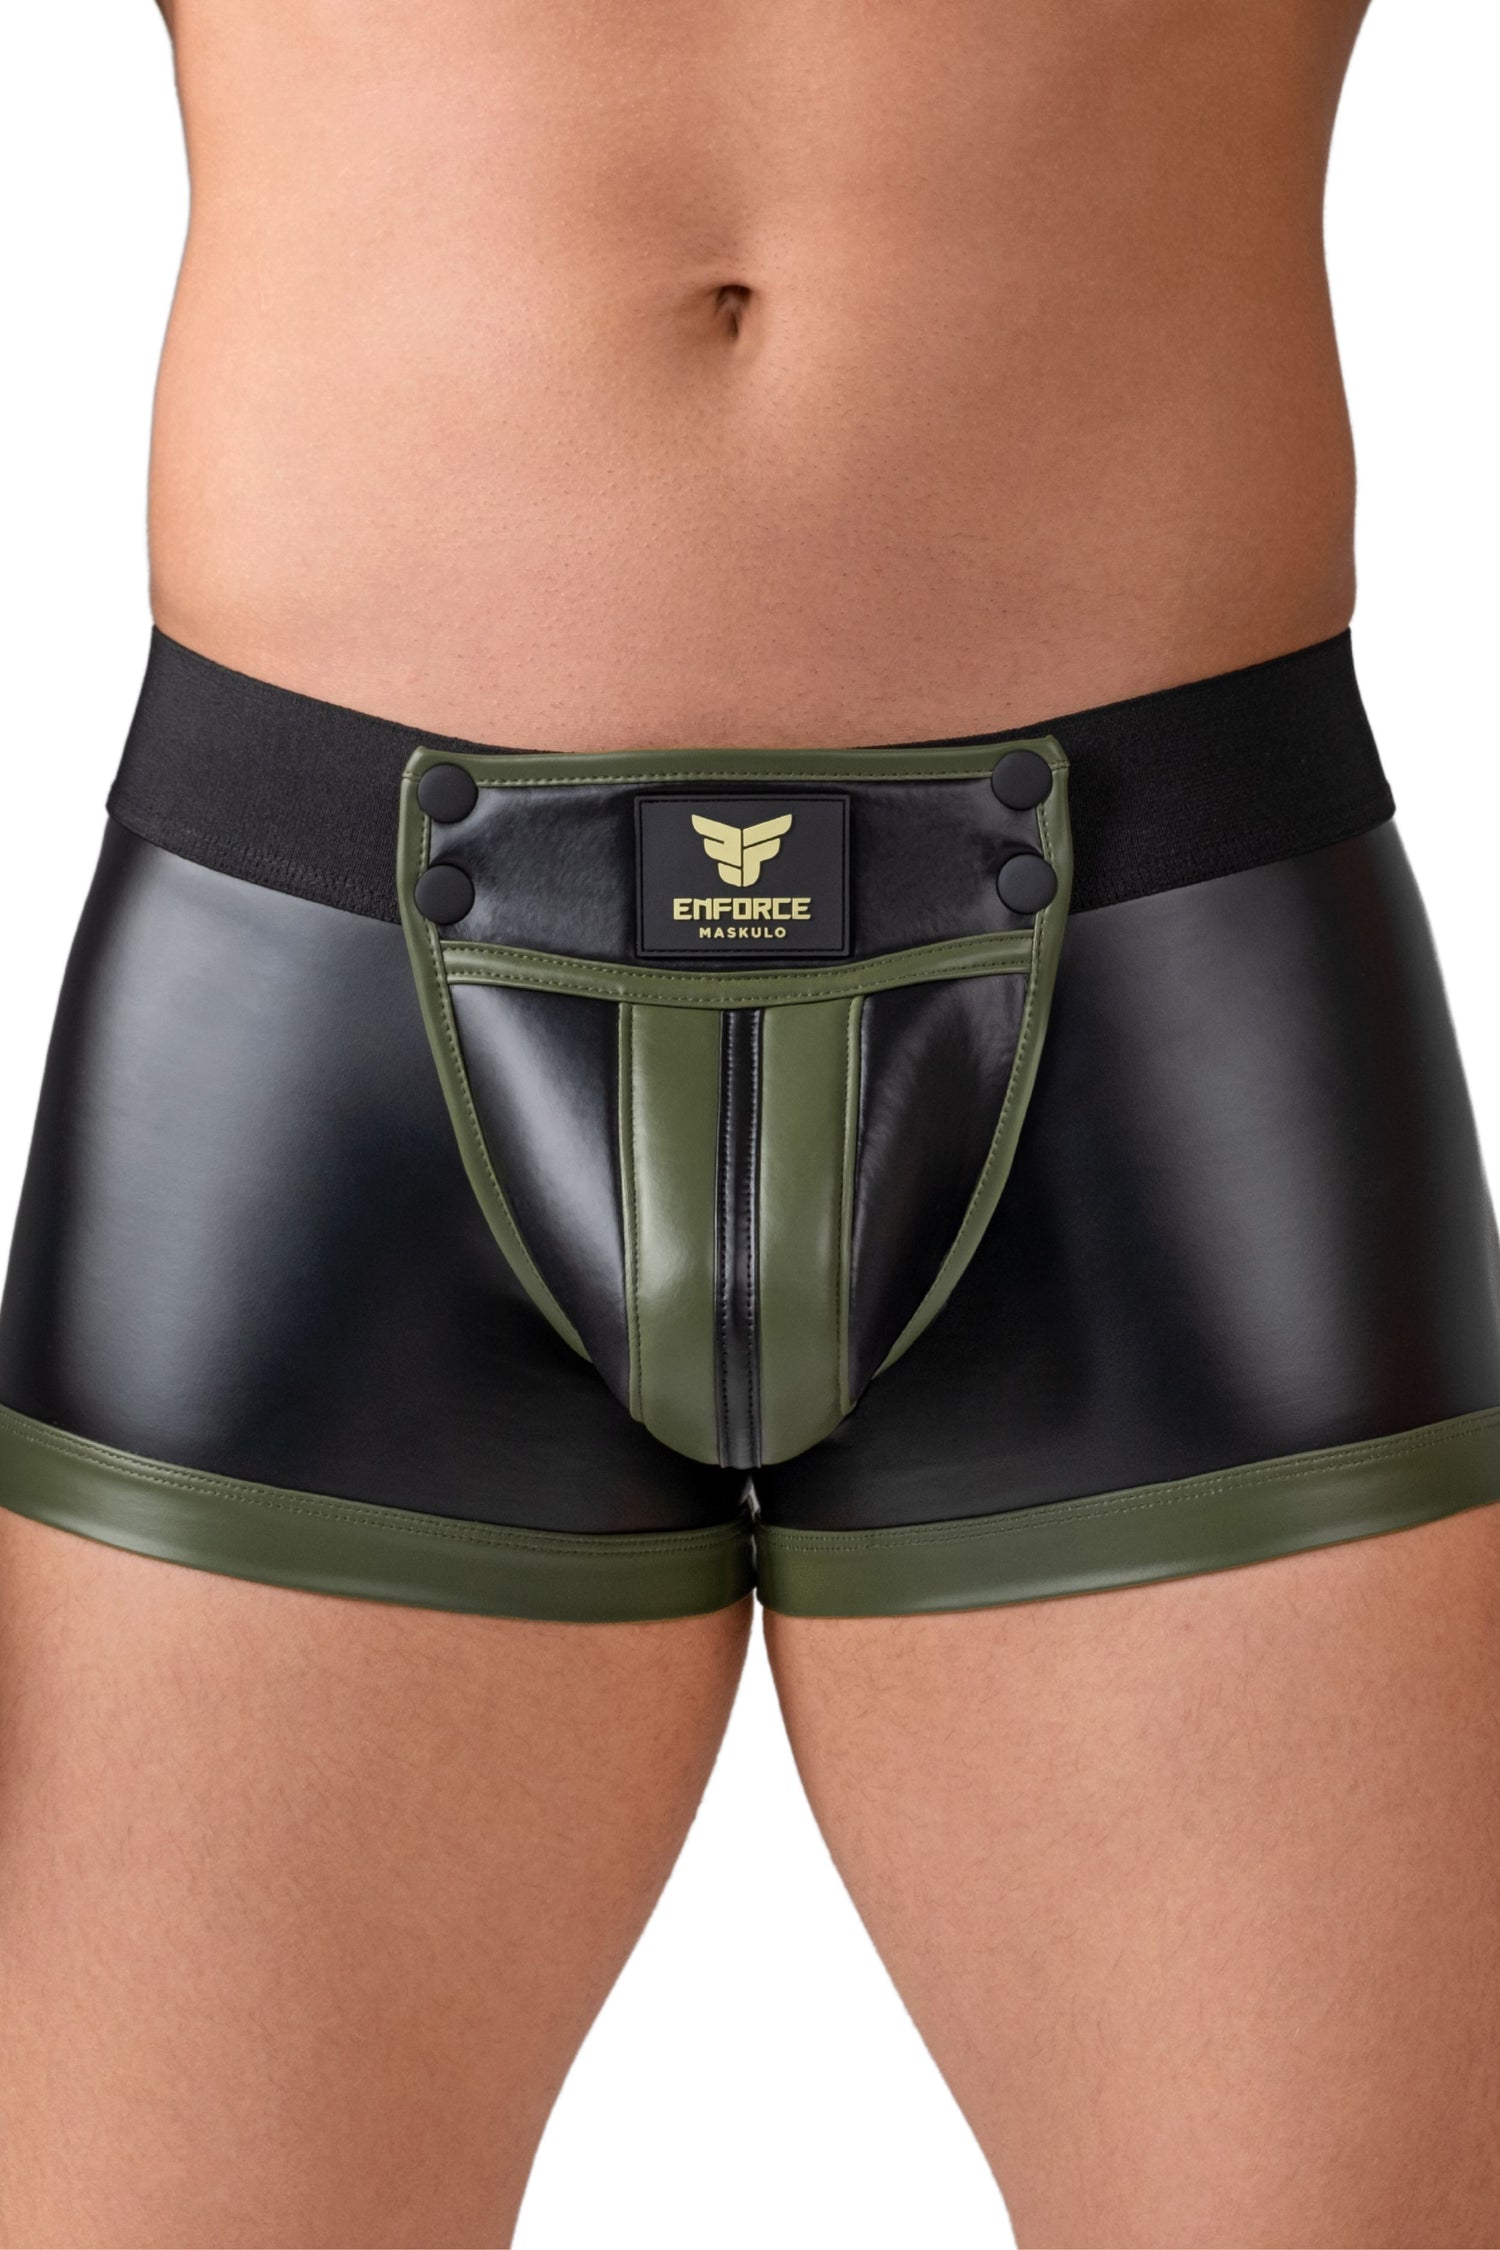 Falcon Enforce Trunk shorts, zipper